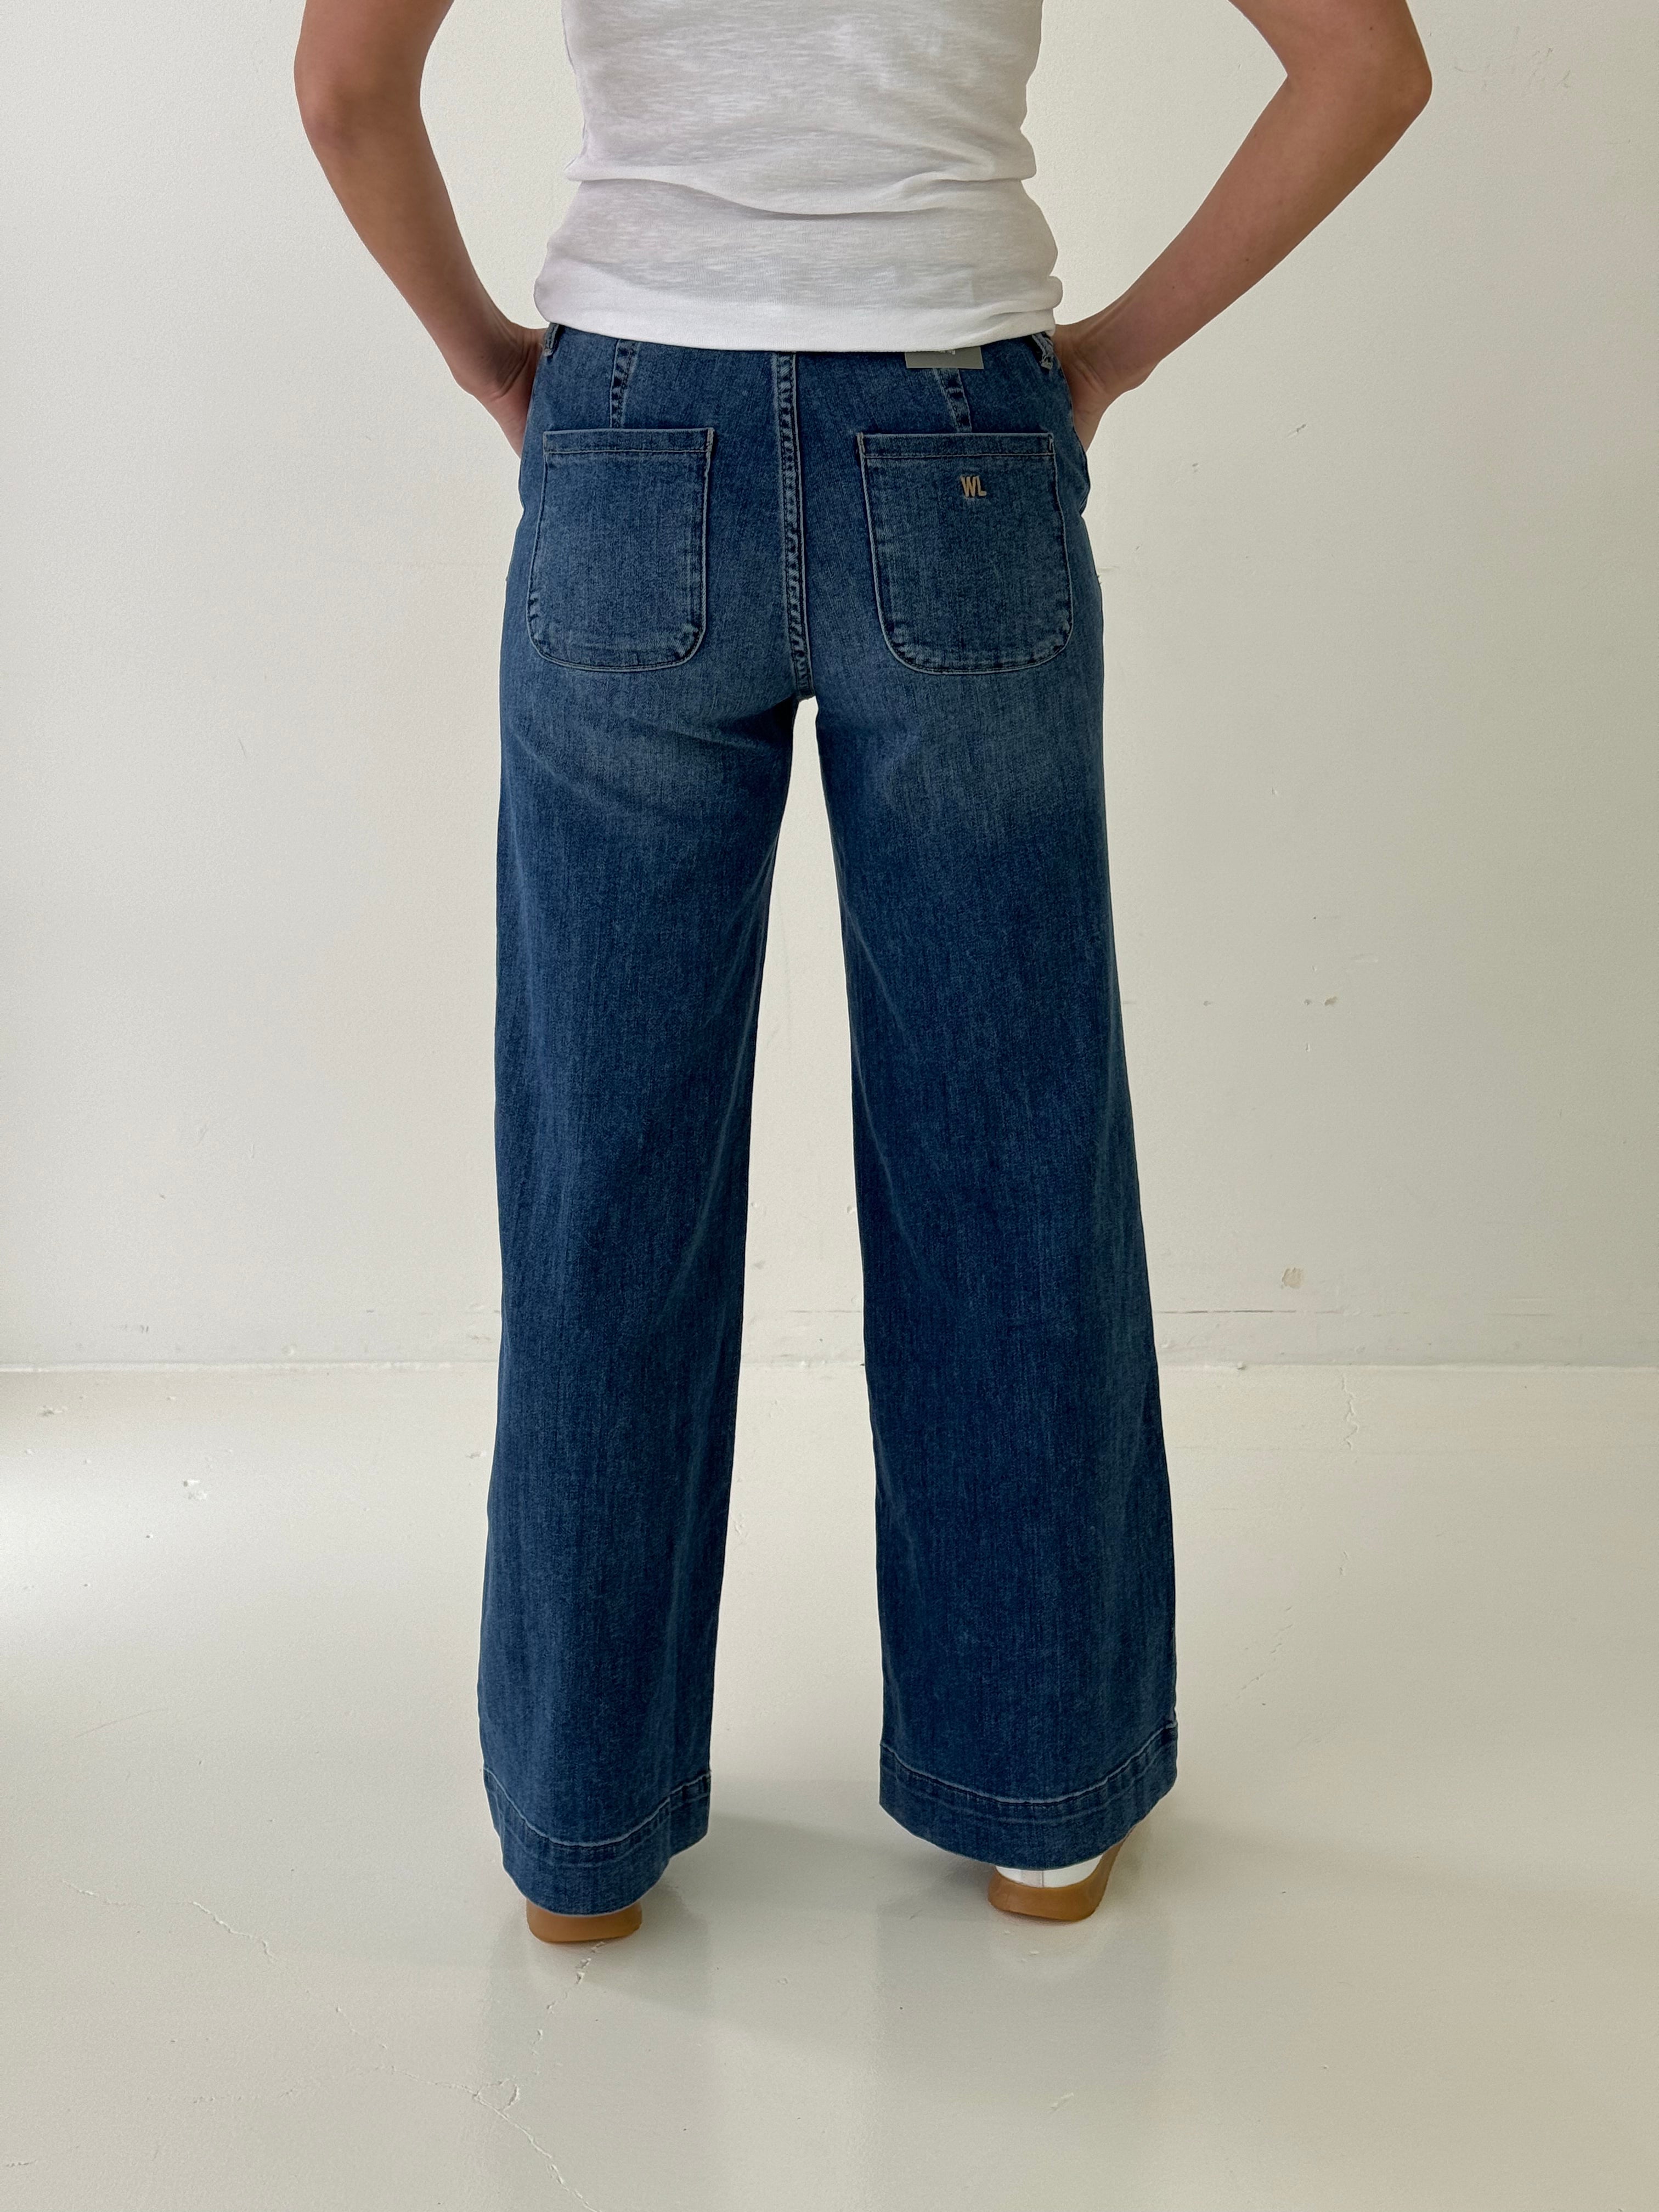 Wash Lab Daily Wide Leg Jeans in Washed Blue-210 Denim-Little Bird Boutique